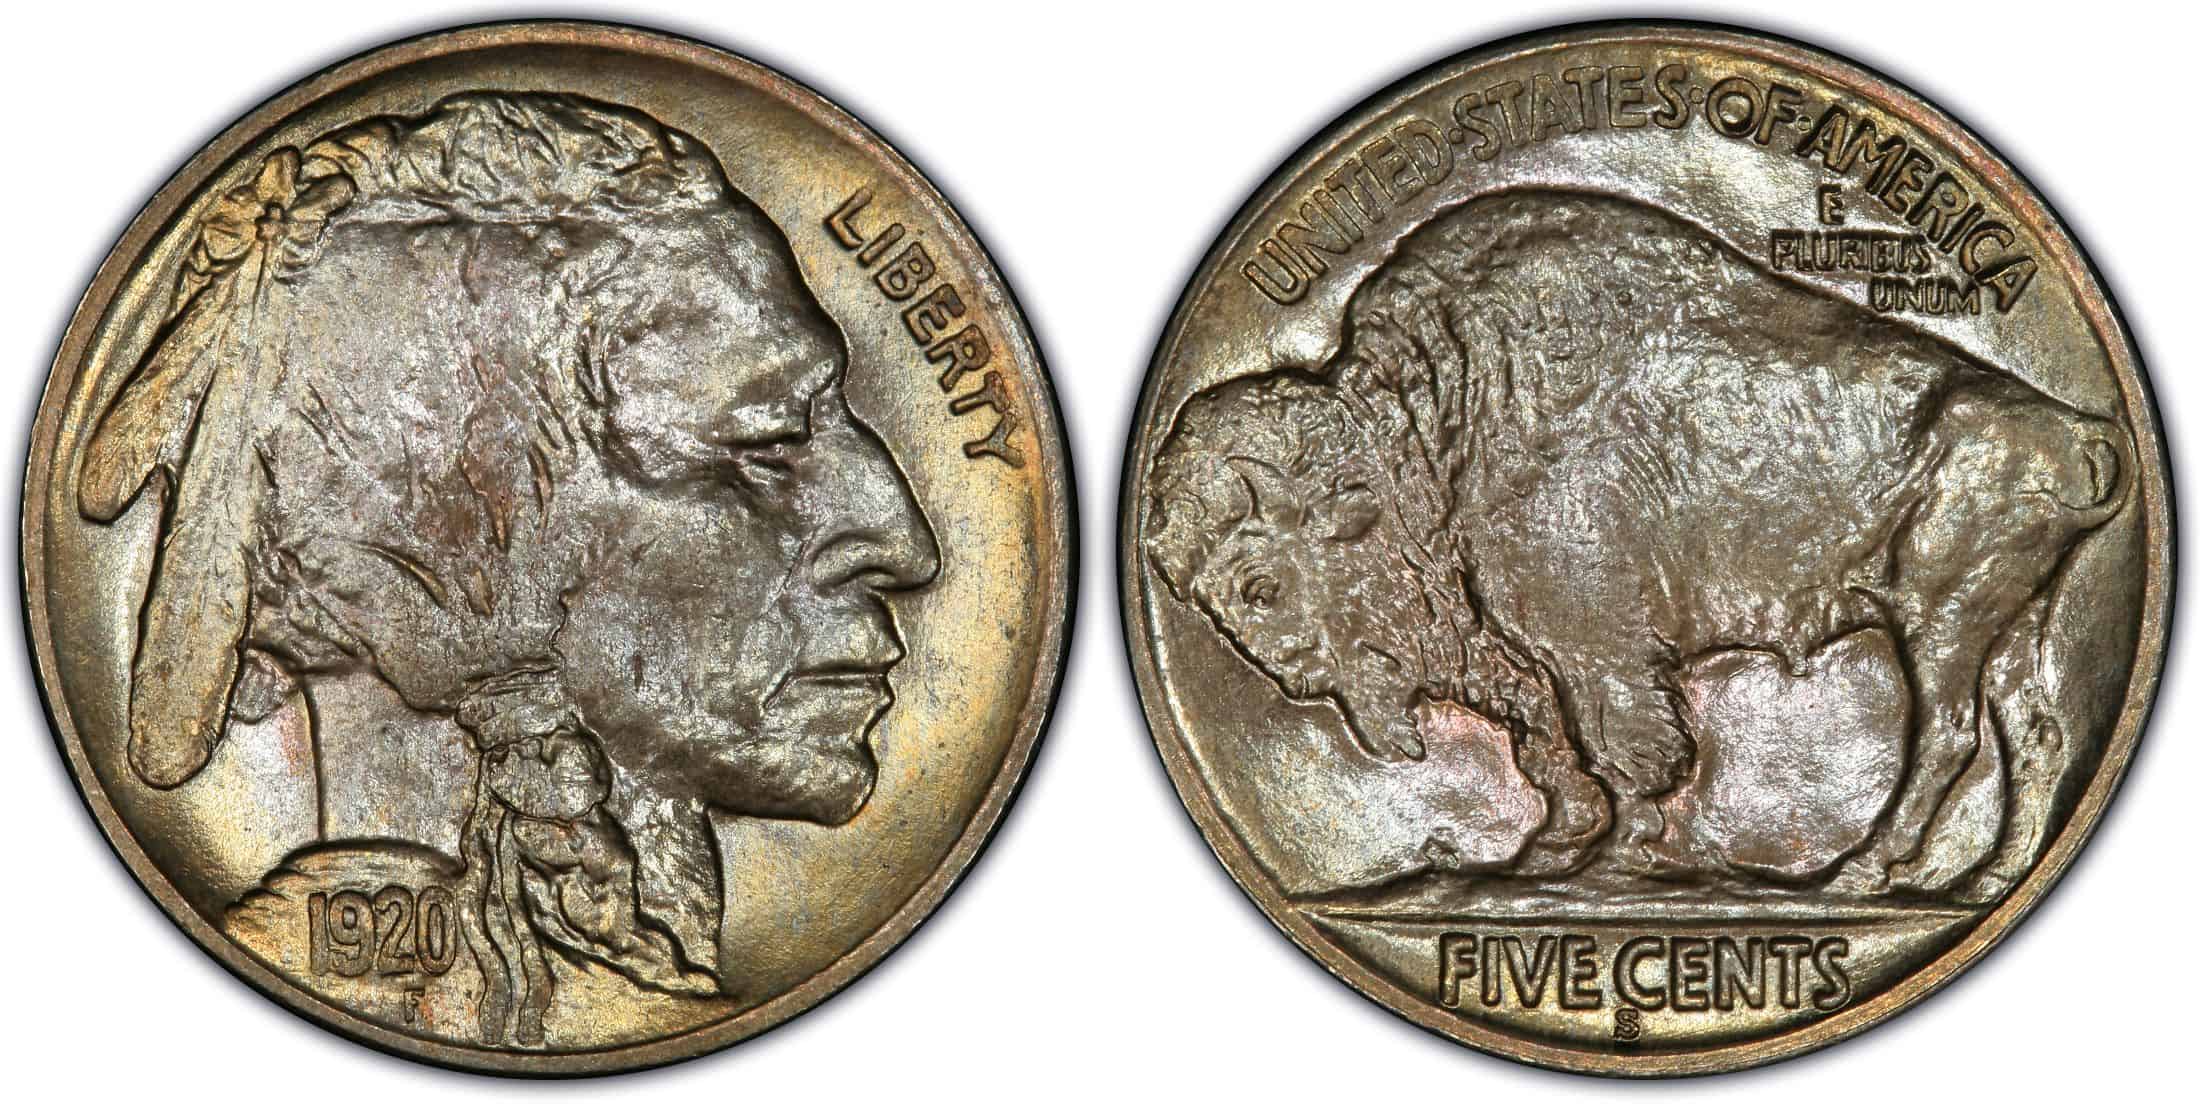 1920 "S" Buffalo Nickel Value